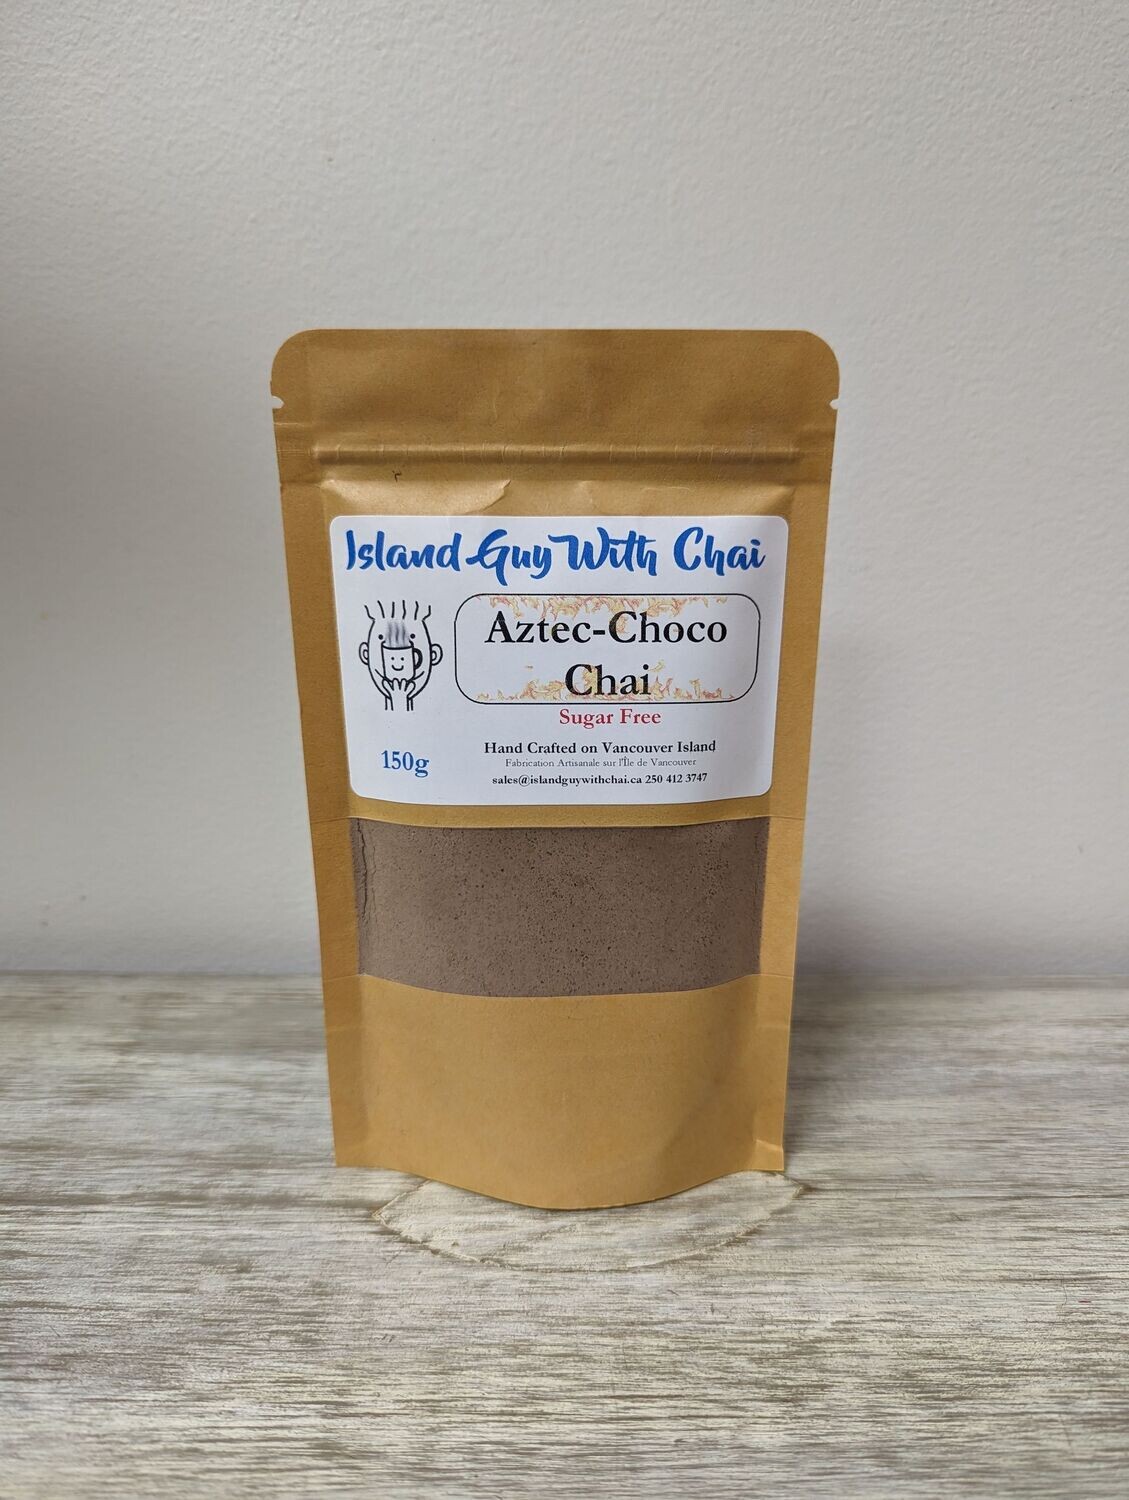 Aztec-Choco Chai